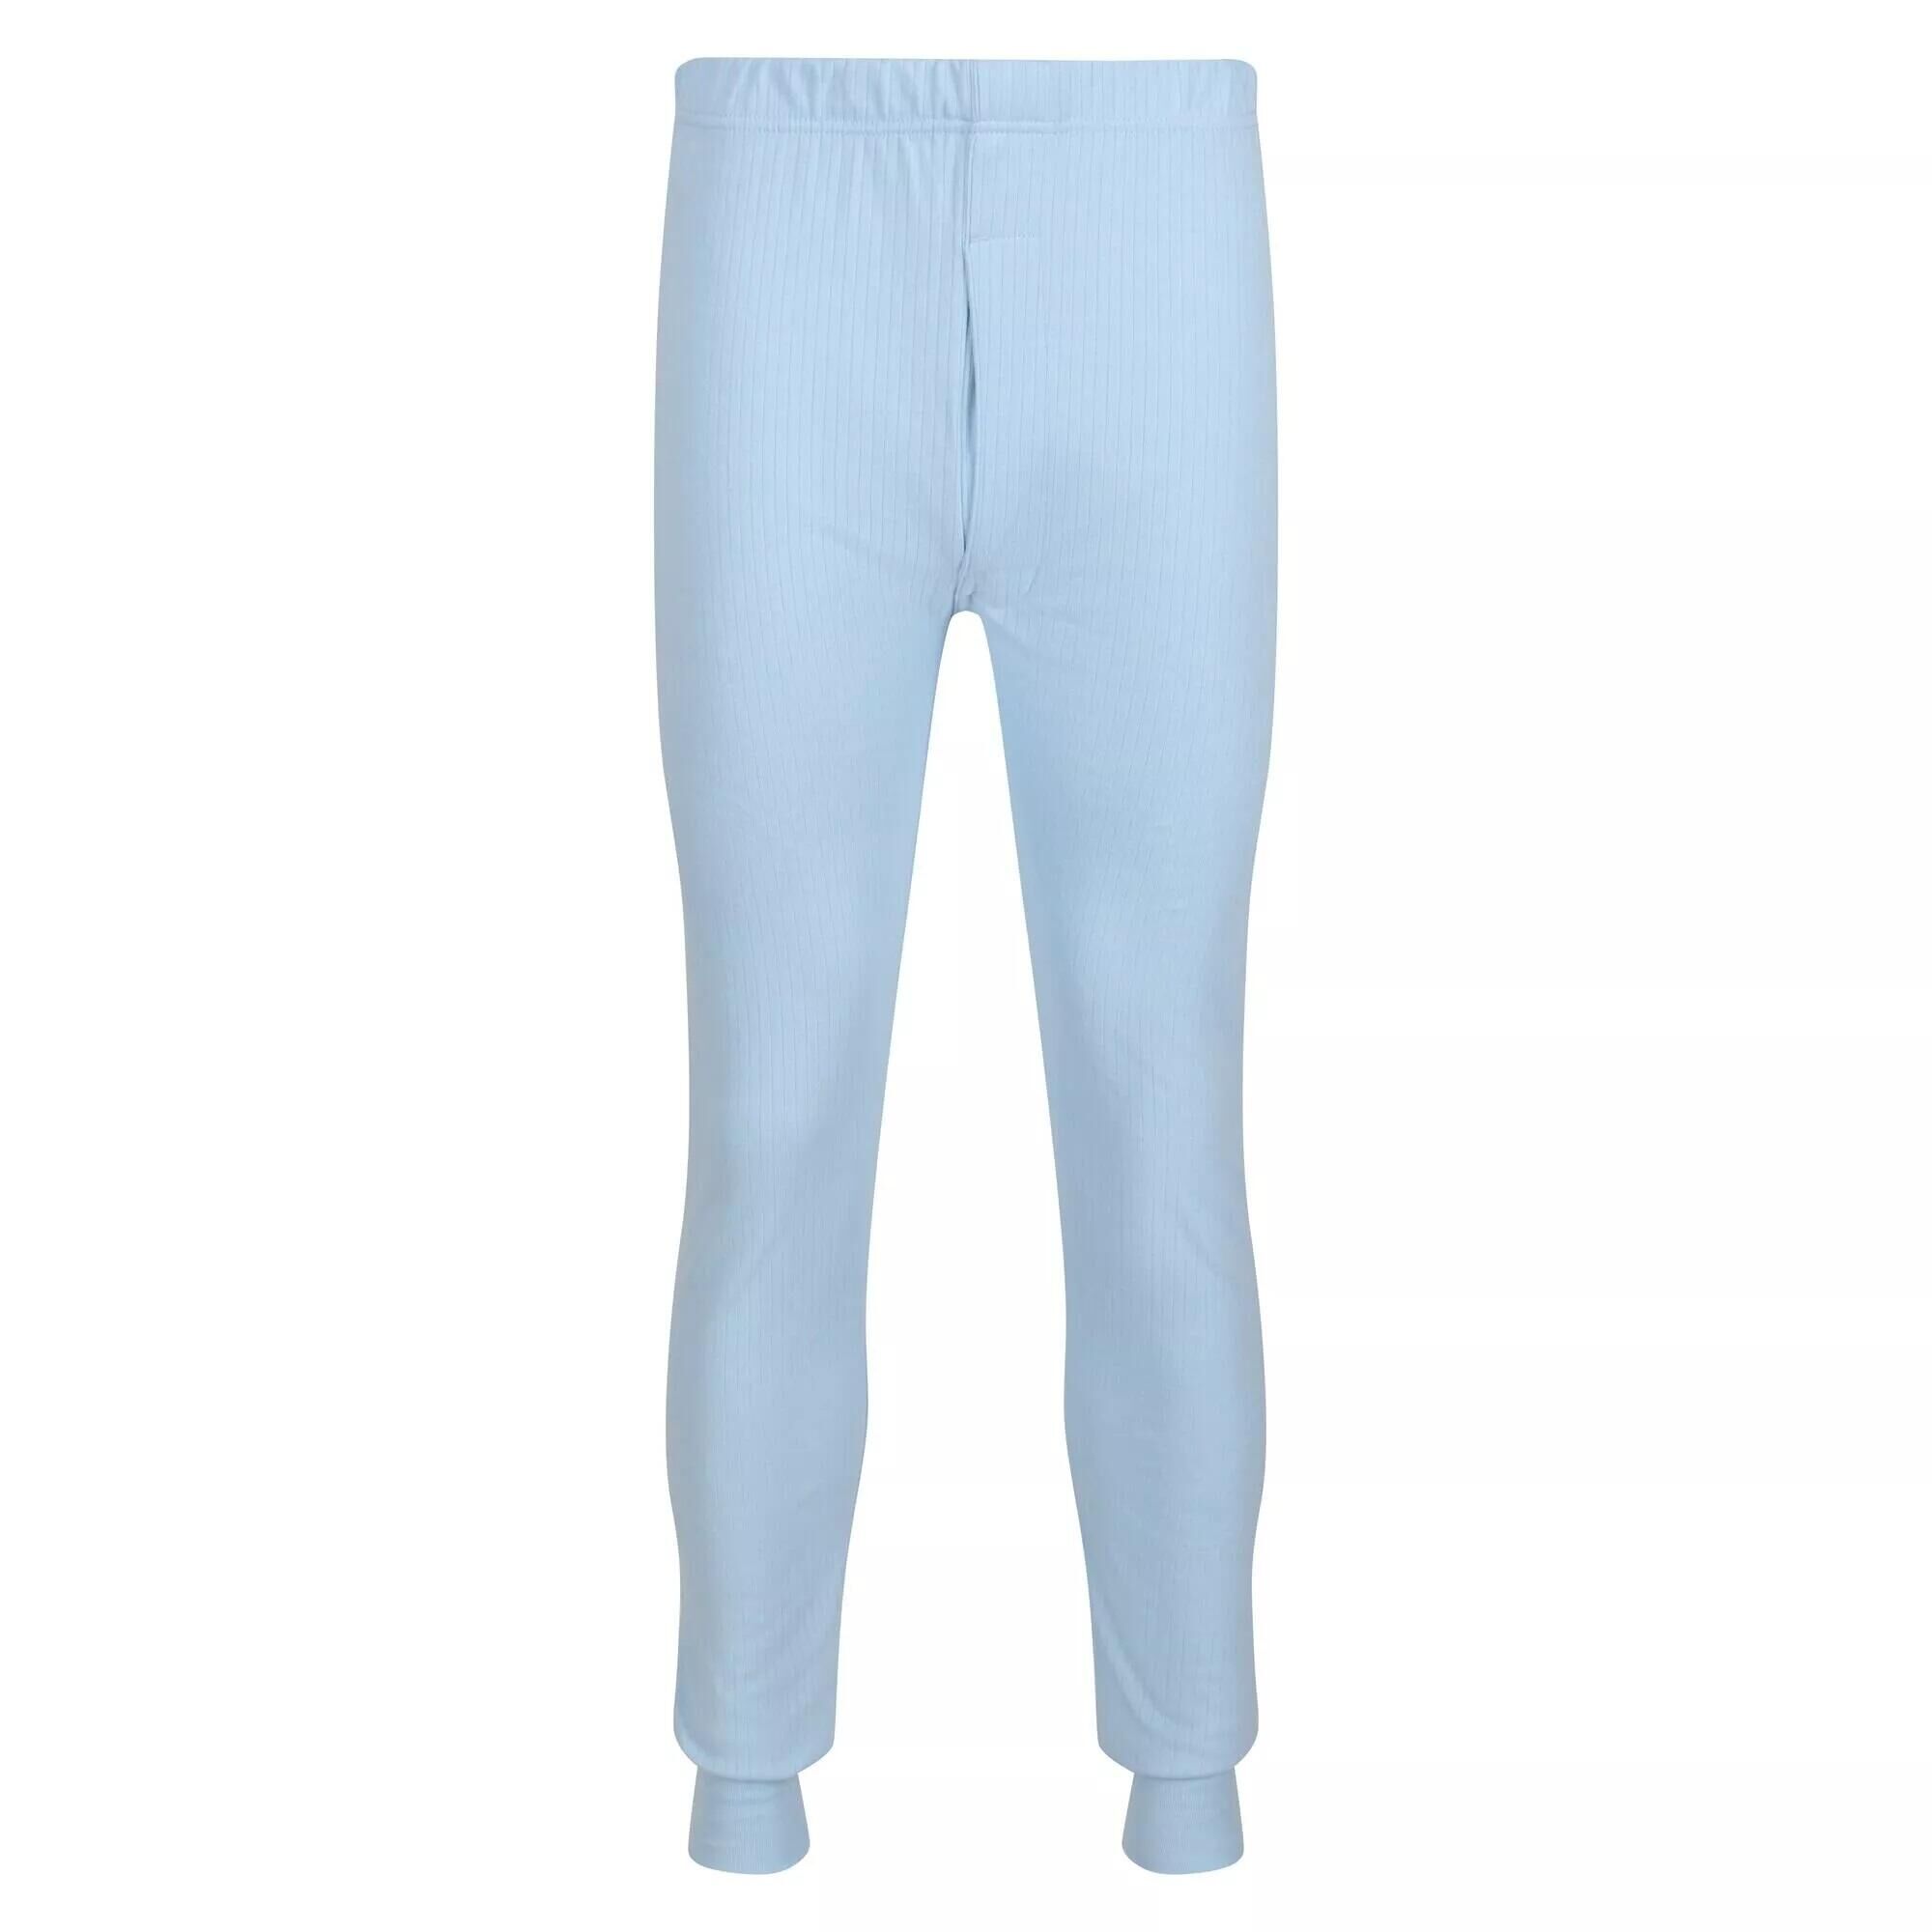 REGATTA Mens Thermal Underwear Long Johns (Blue)